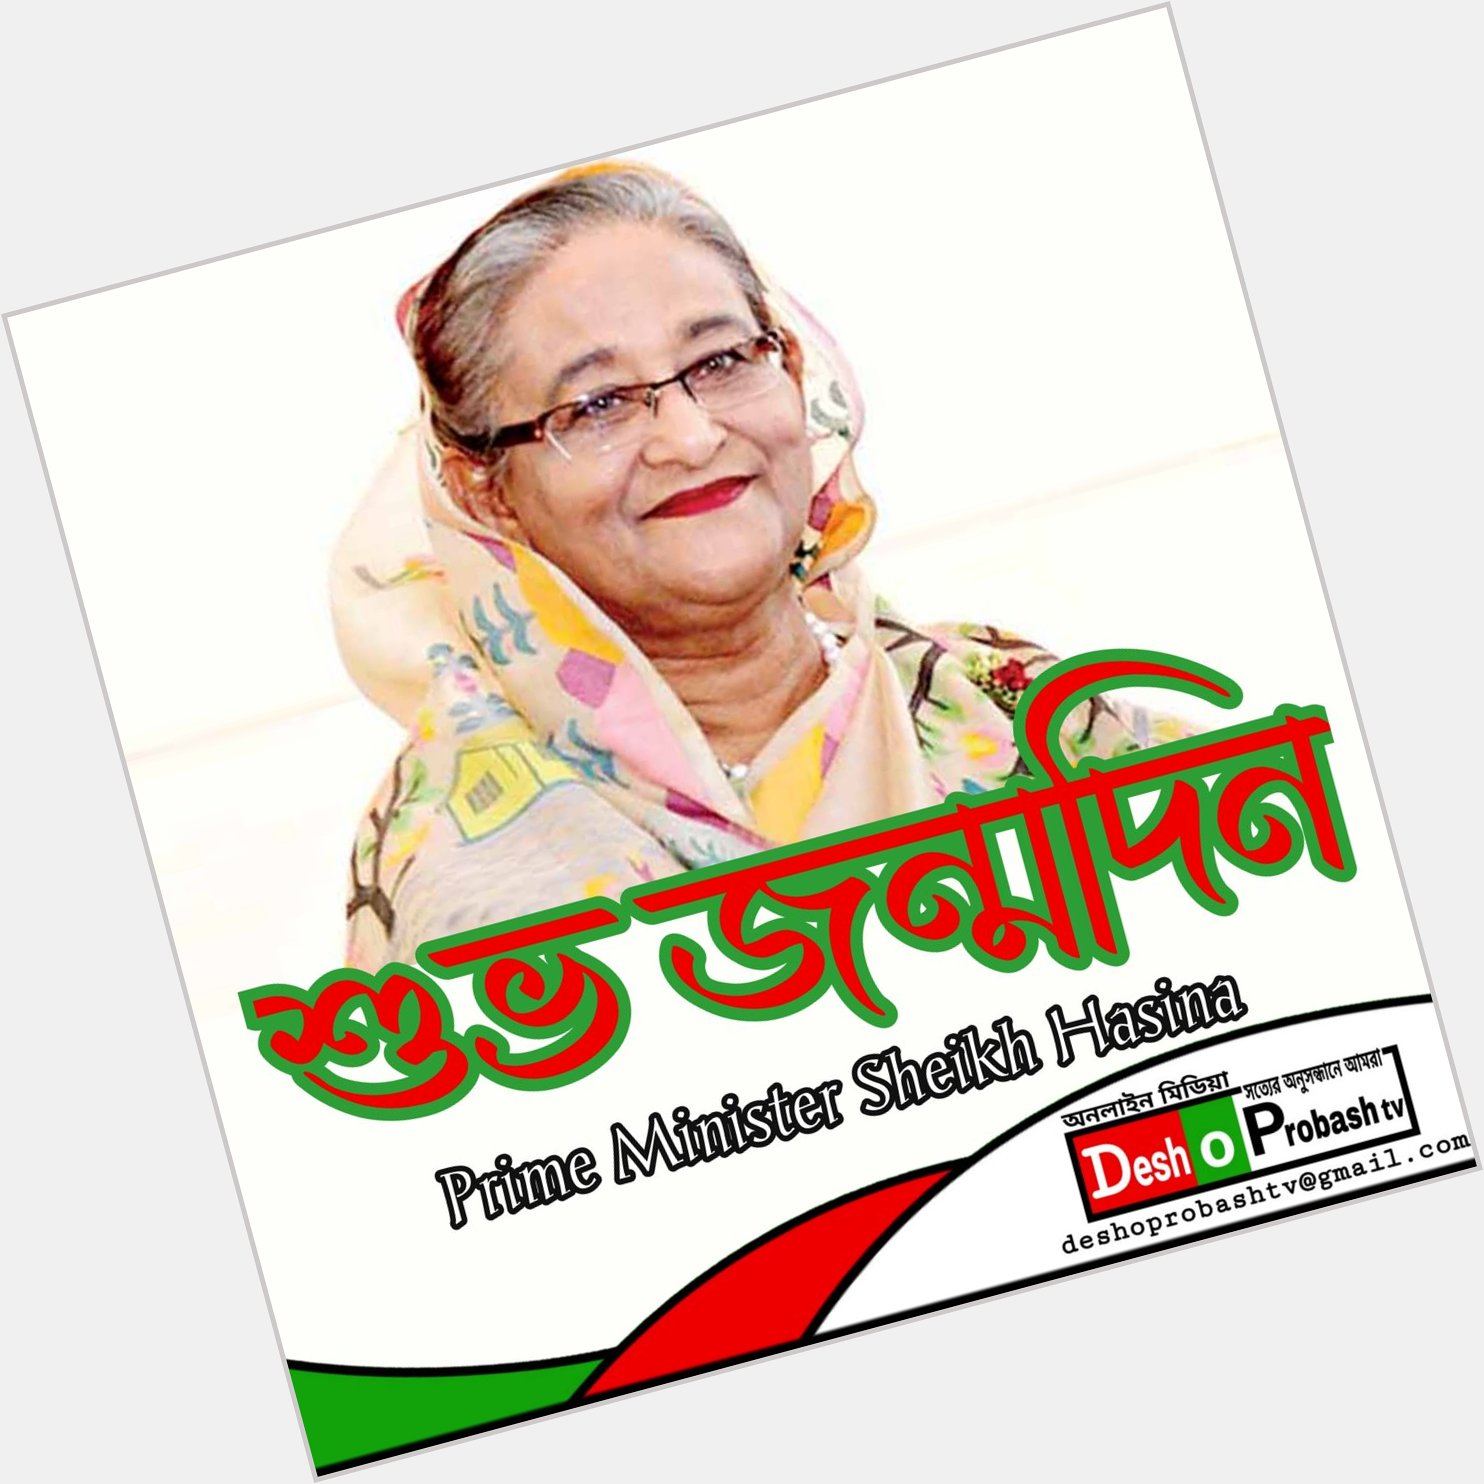 Happy birthday
Prime Minister Sheikh Hasina 

Happy birthday to you 
I wish you good health and long life 